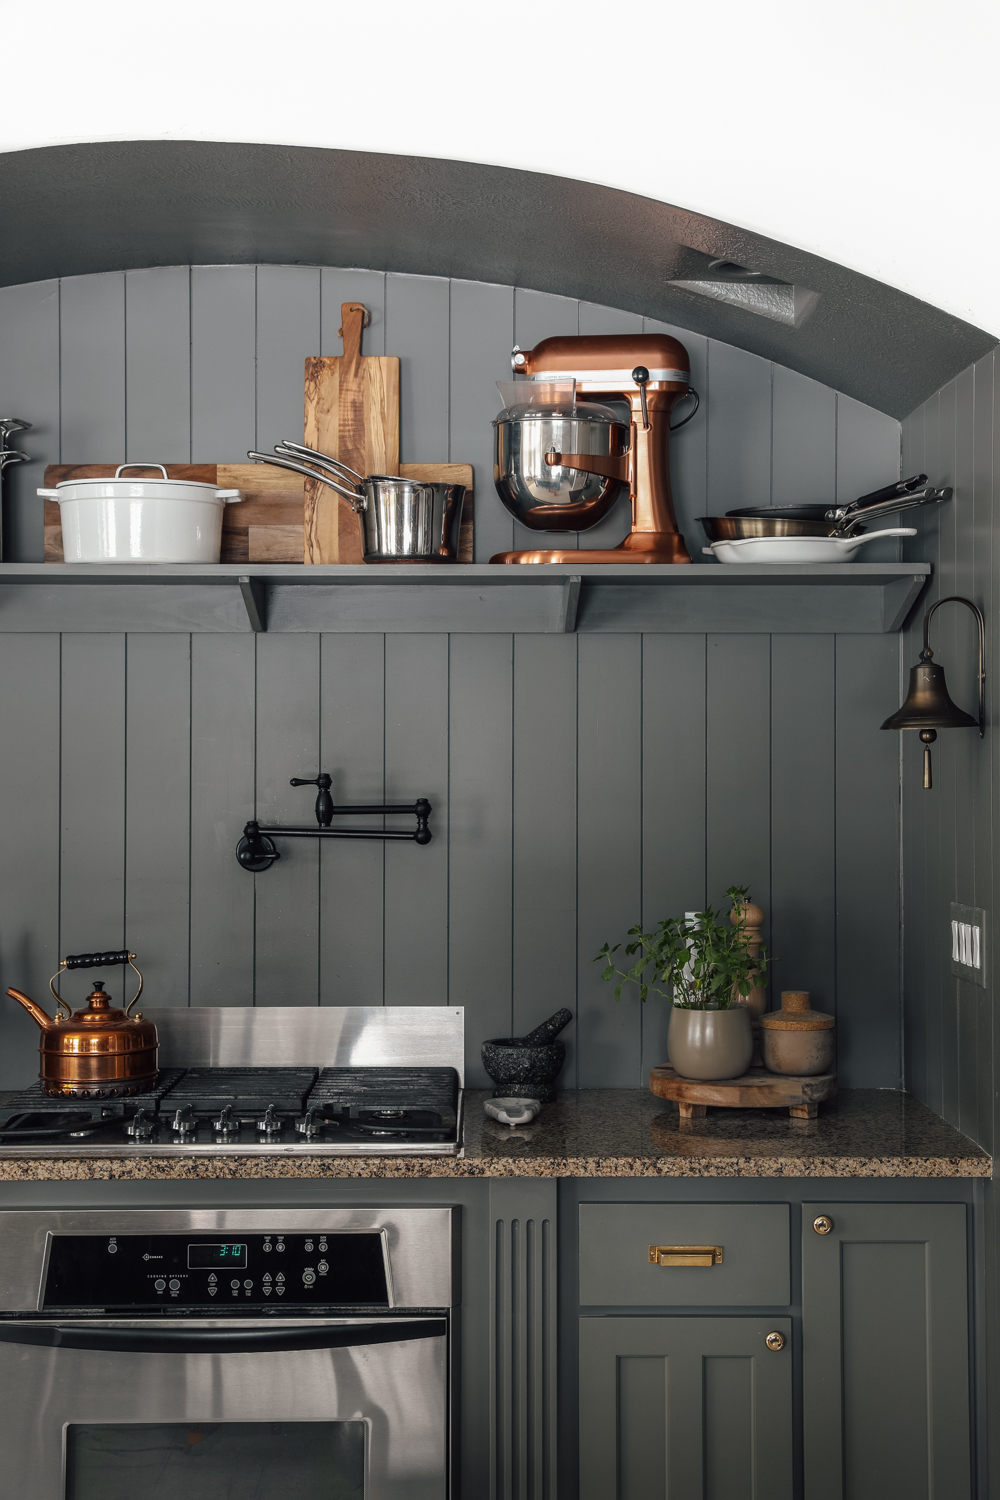 26 Small Kitchen Design Ideas – StyleCaster